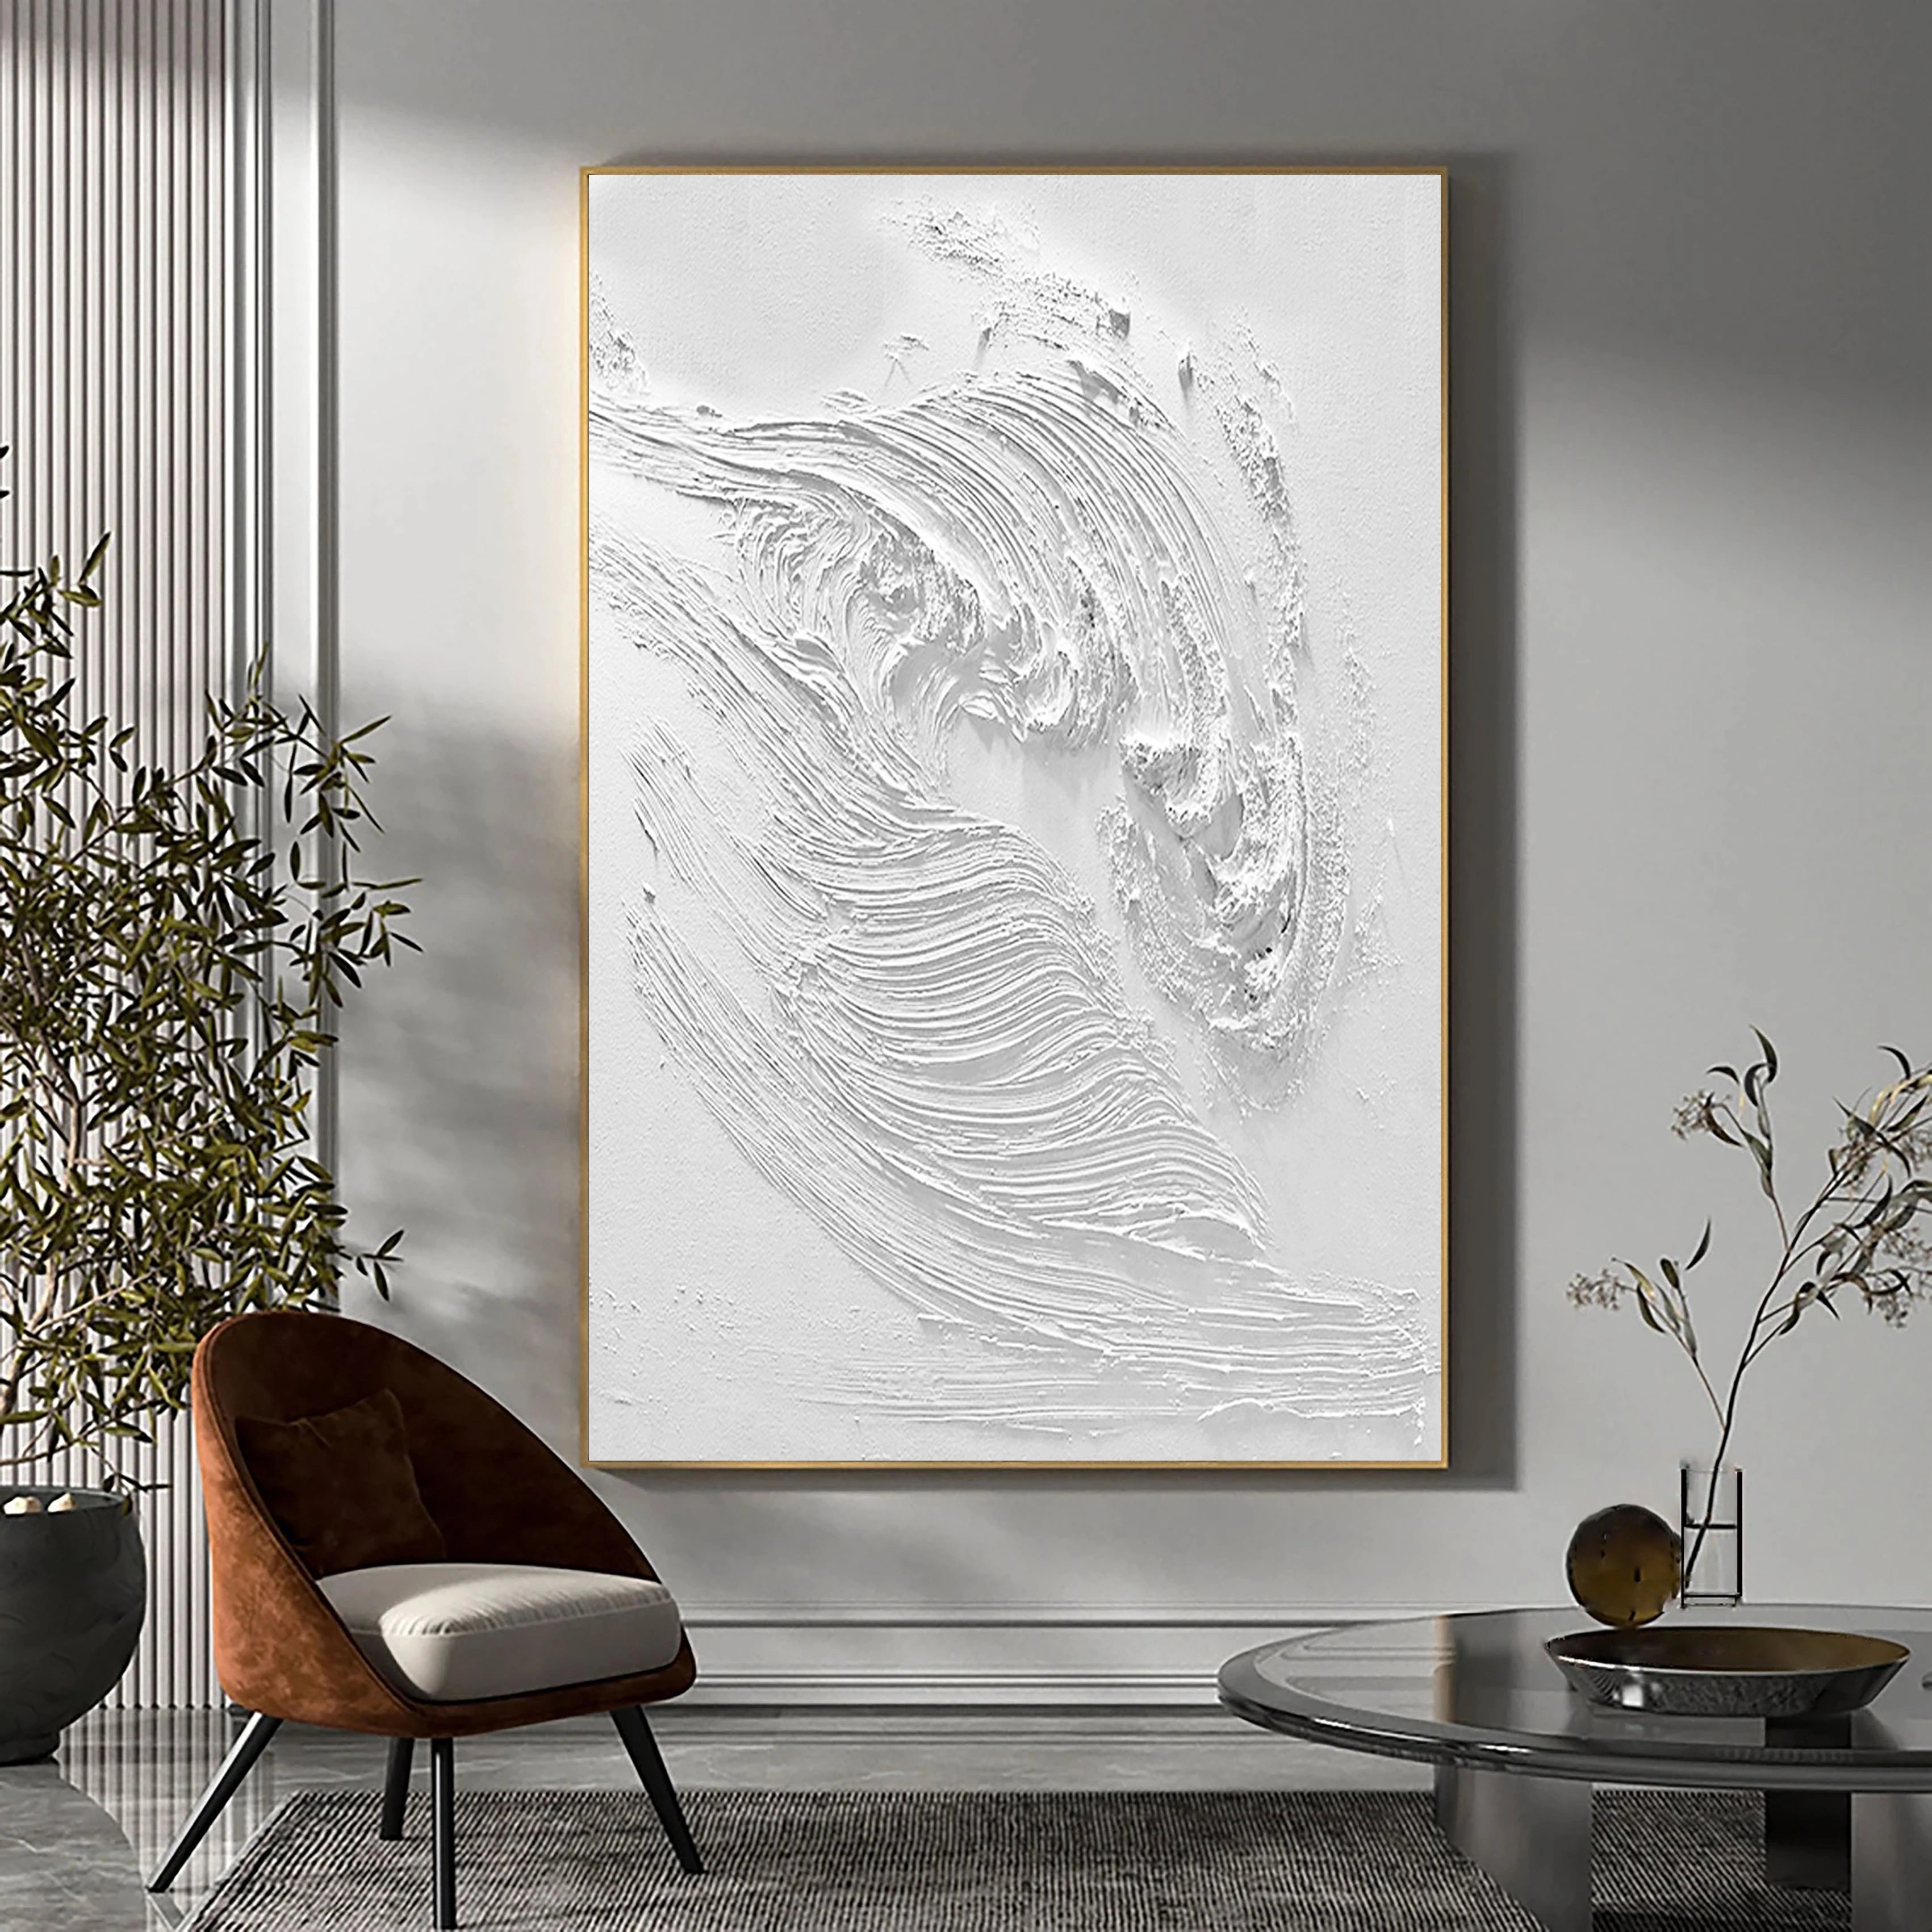 White Ocean Waves Textured Plaster Art Painting, Minimalist Wall Artwork for Room Decor